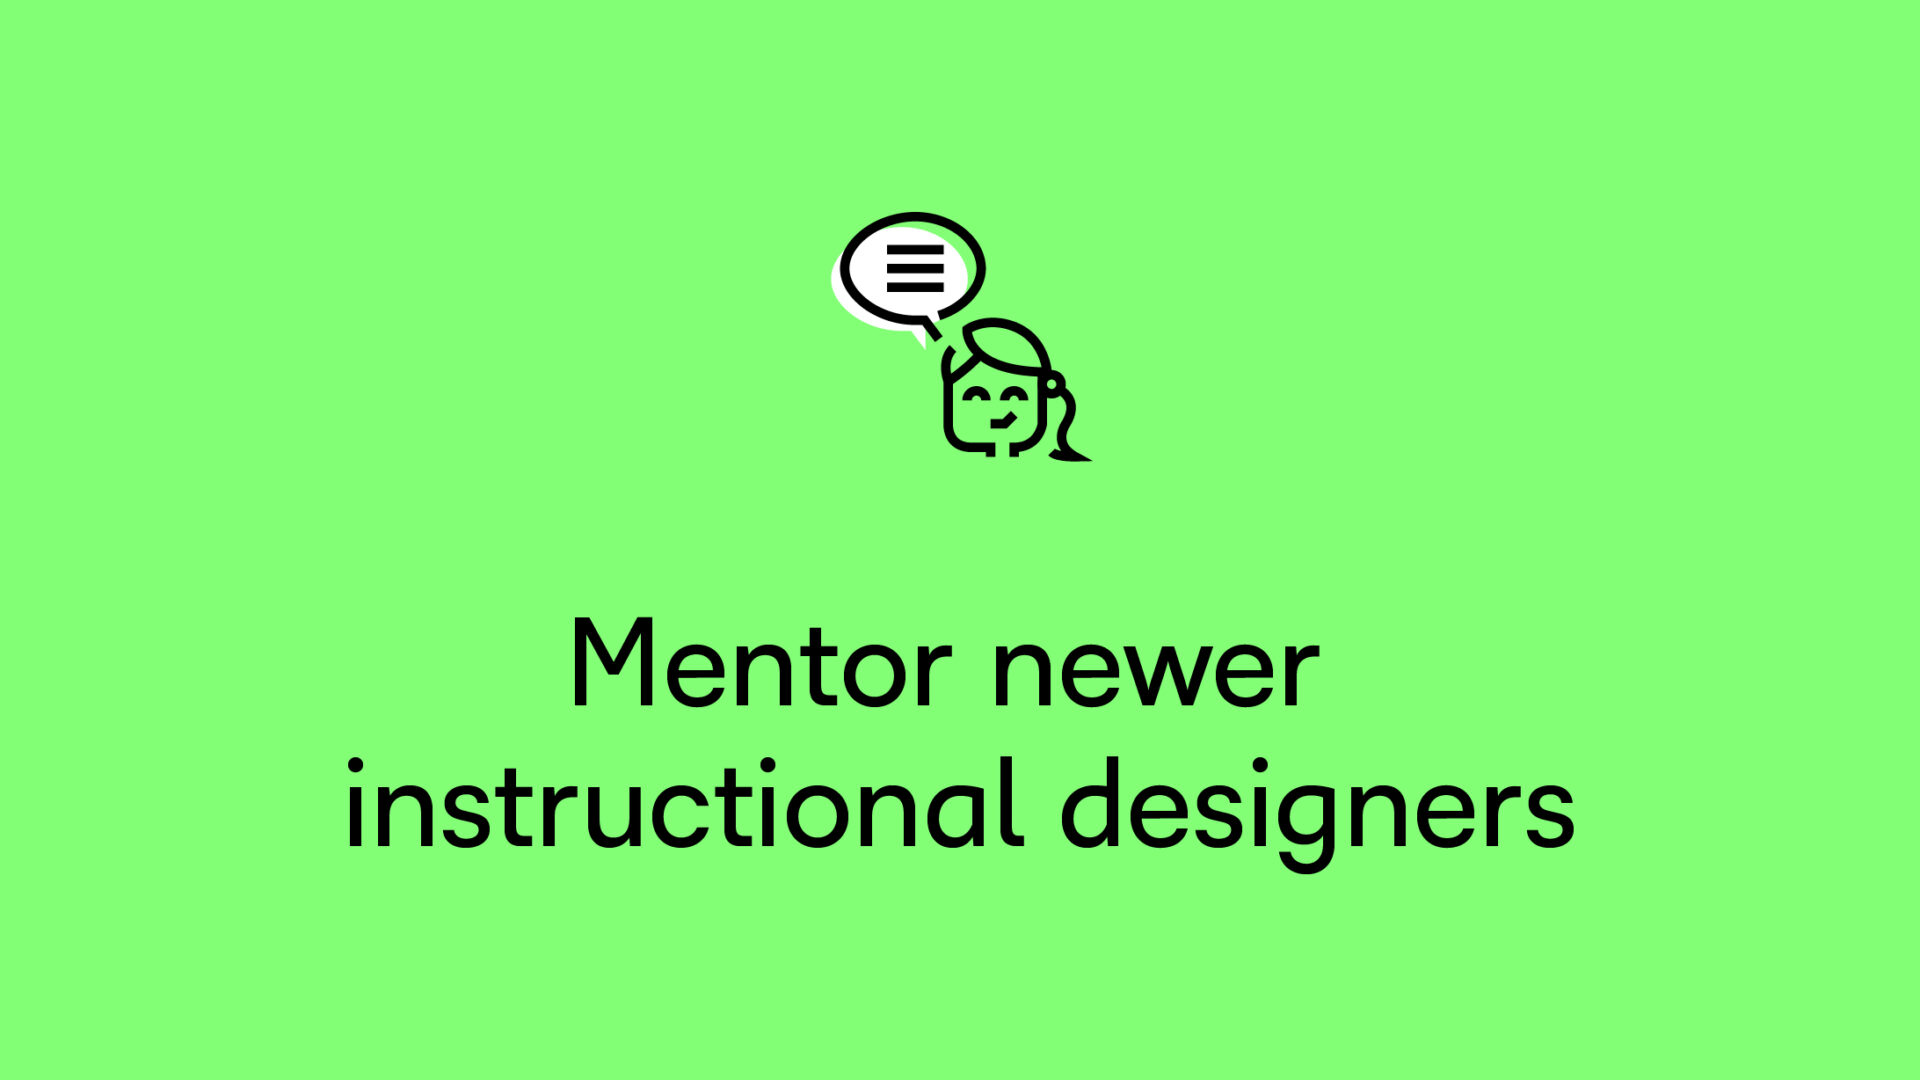 Mentor newer instructional designers